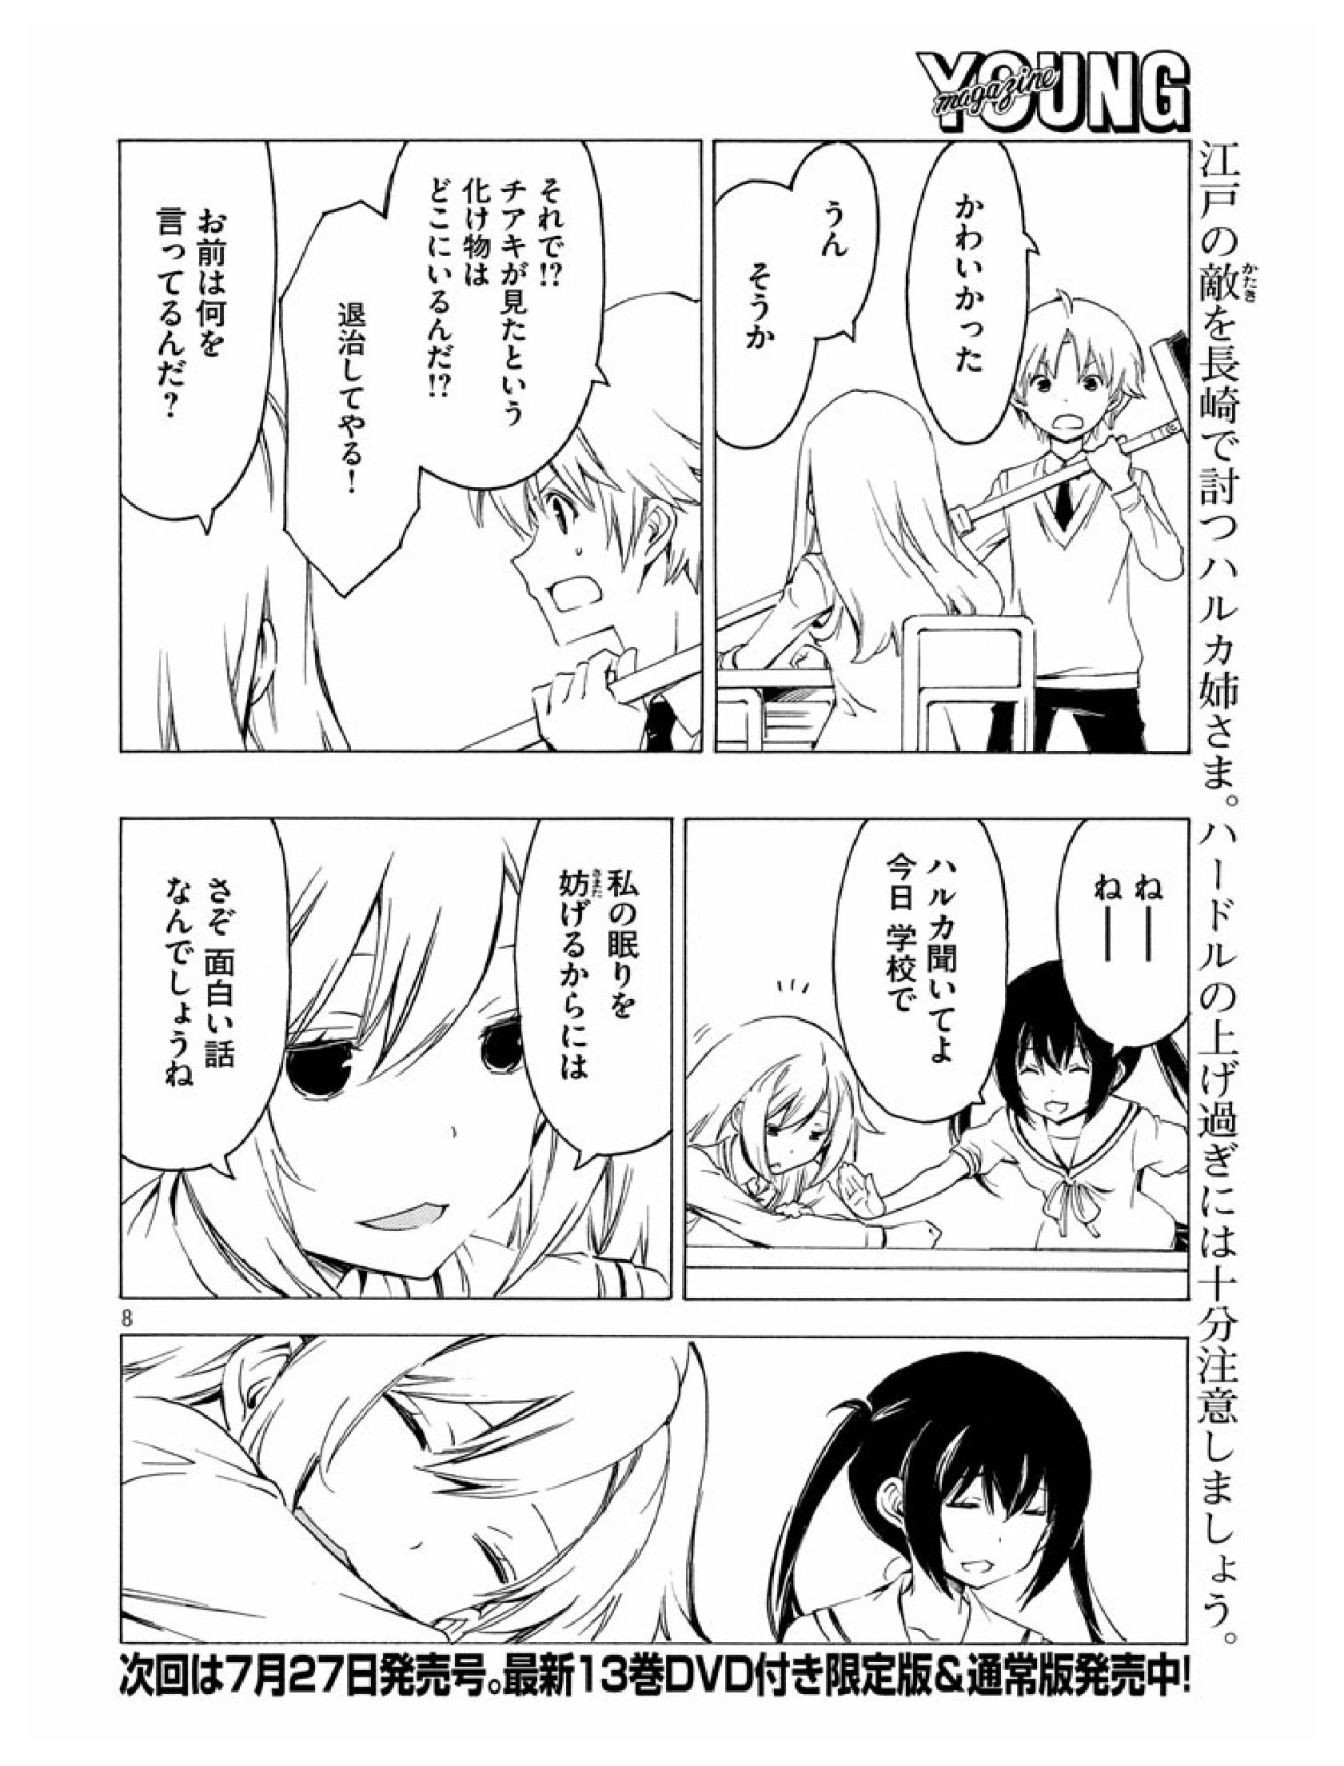 Minami-ke - Chapter 272 - Page 8